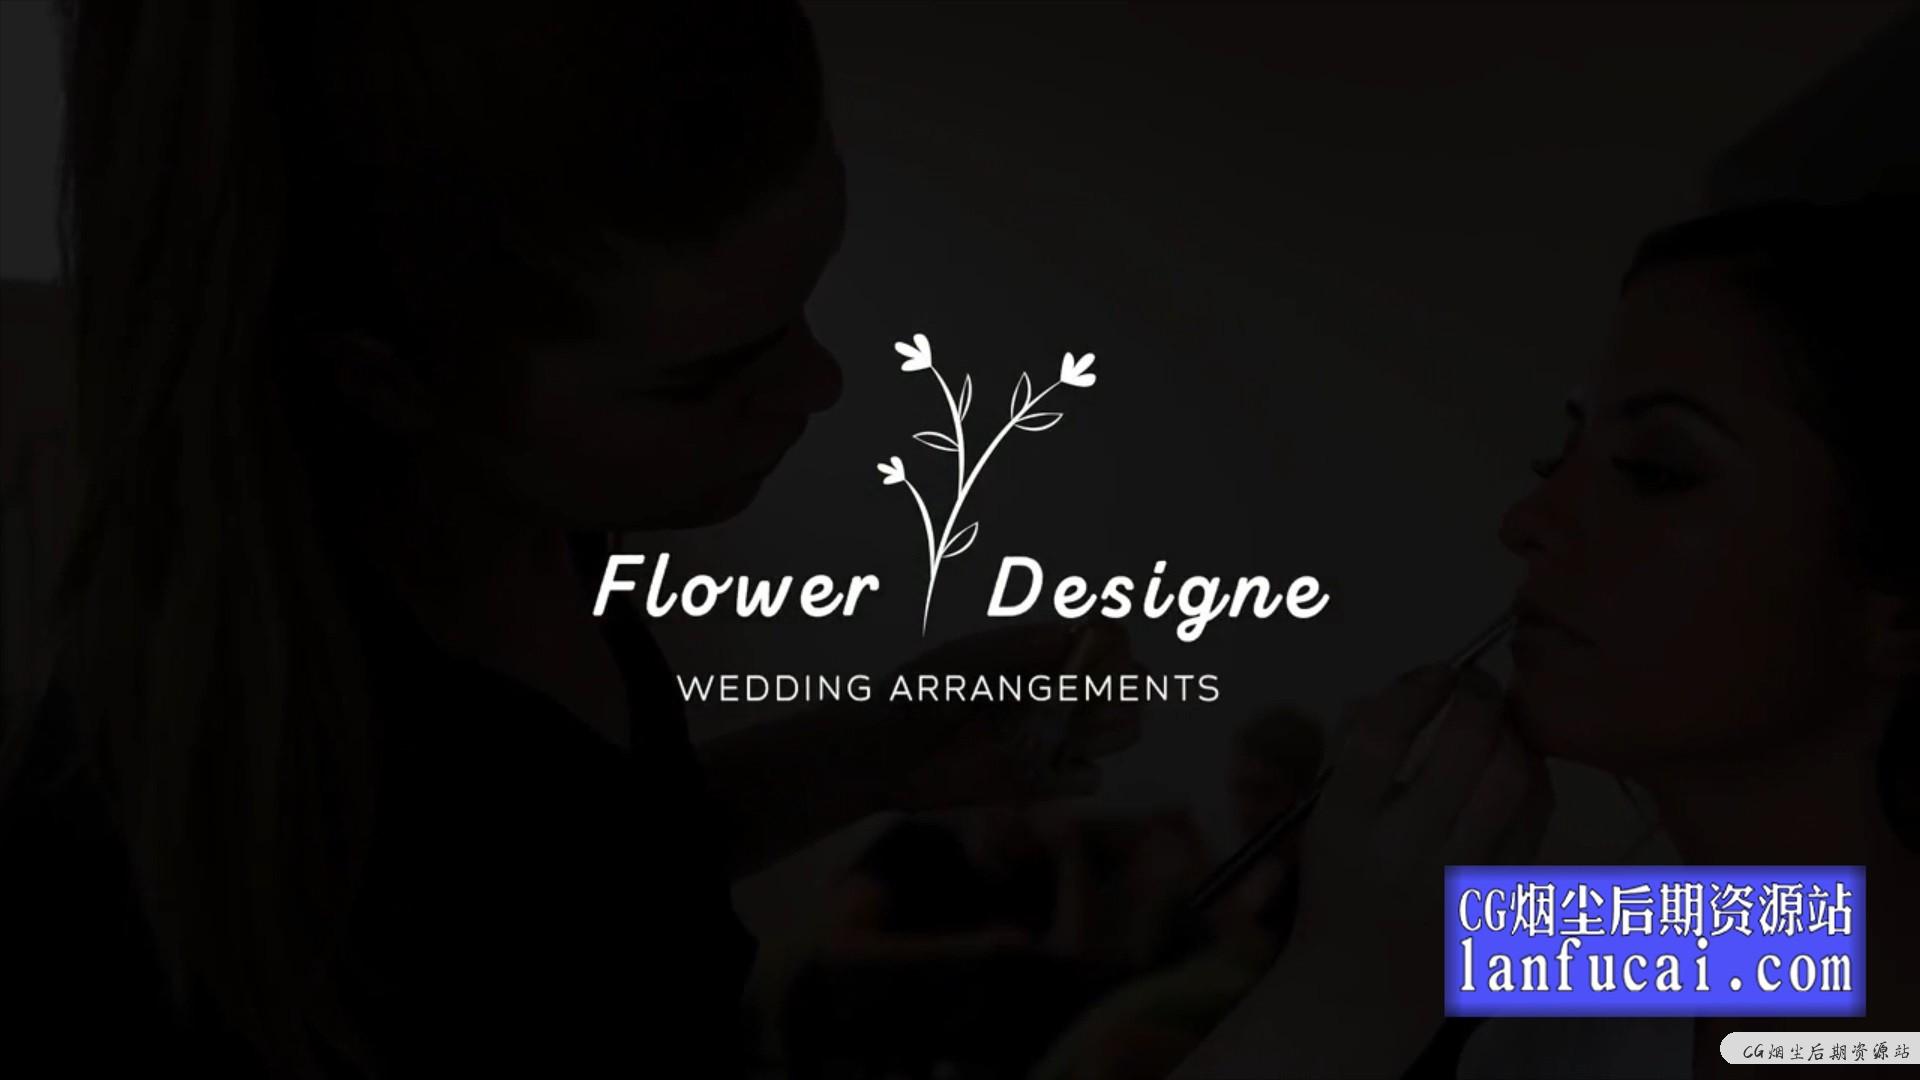 fcpx标题插件 婚礼人名Vlog开场字幕标题动画模板 Wedding Logos Titles